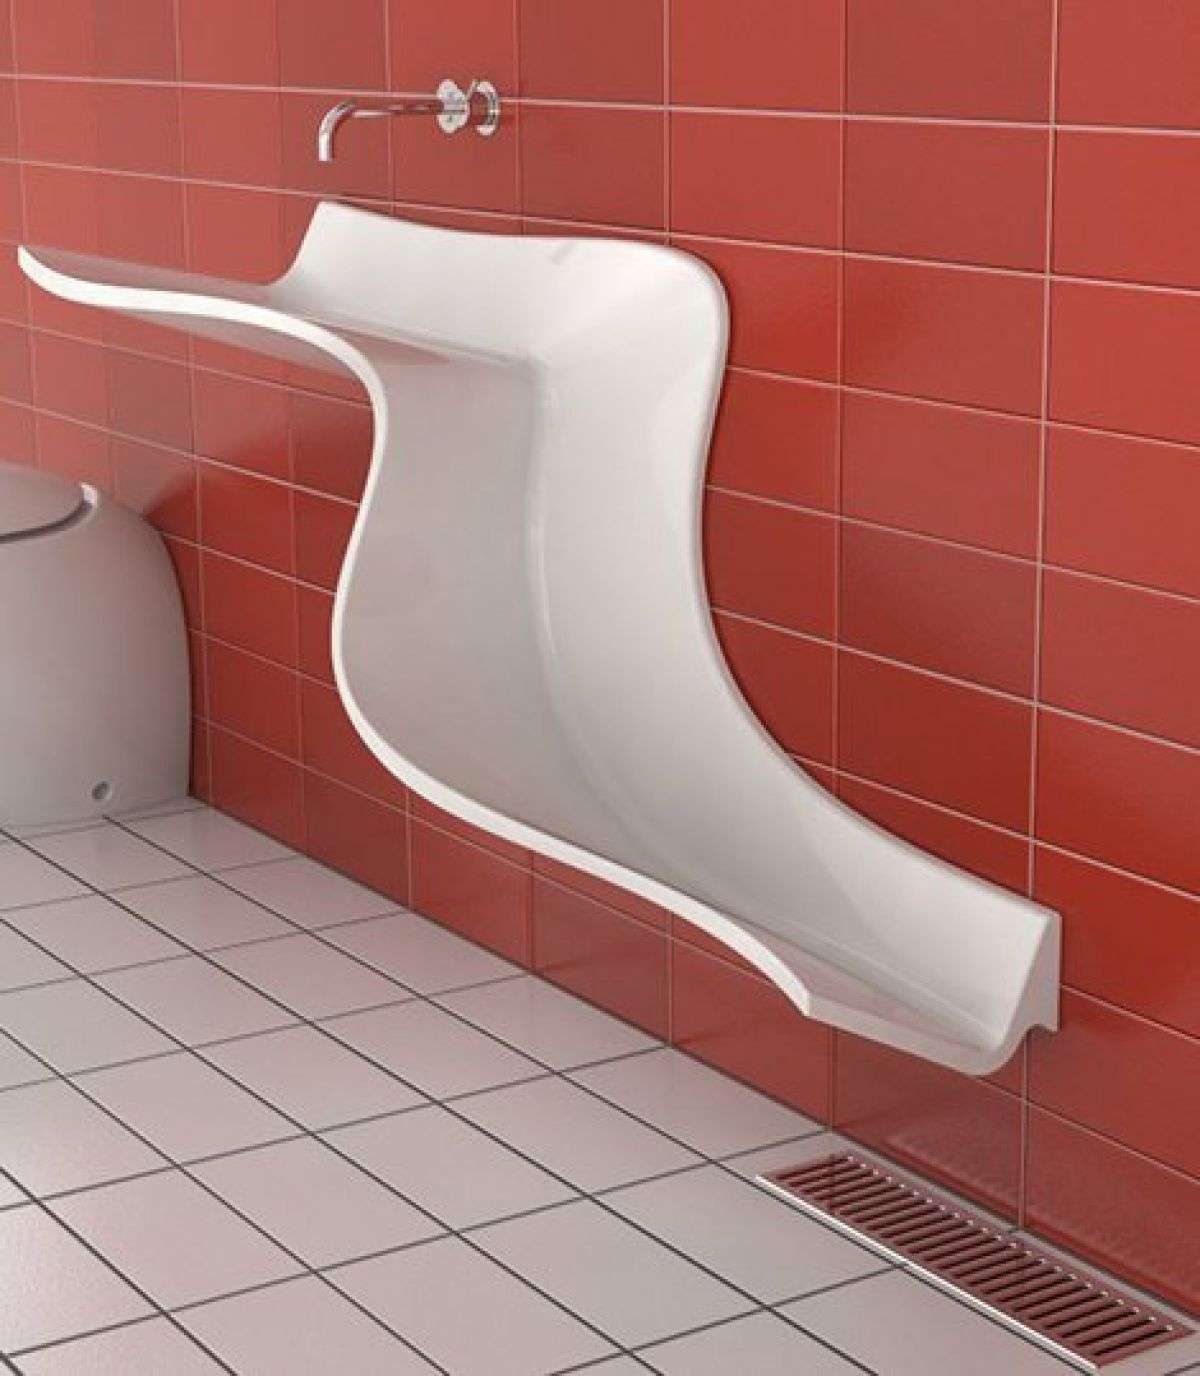 A sink that looks like a water slide